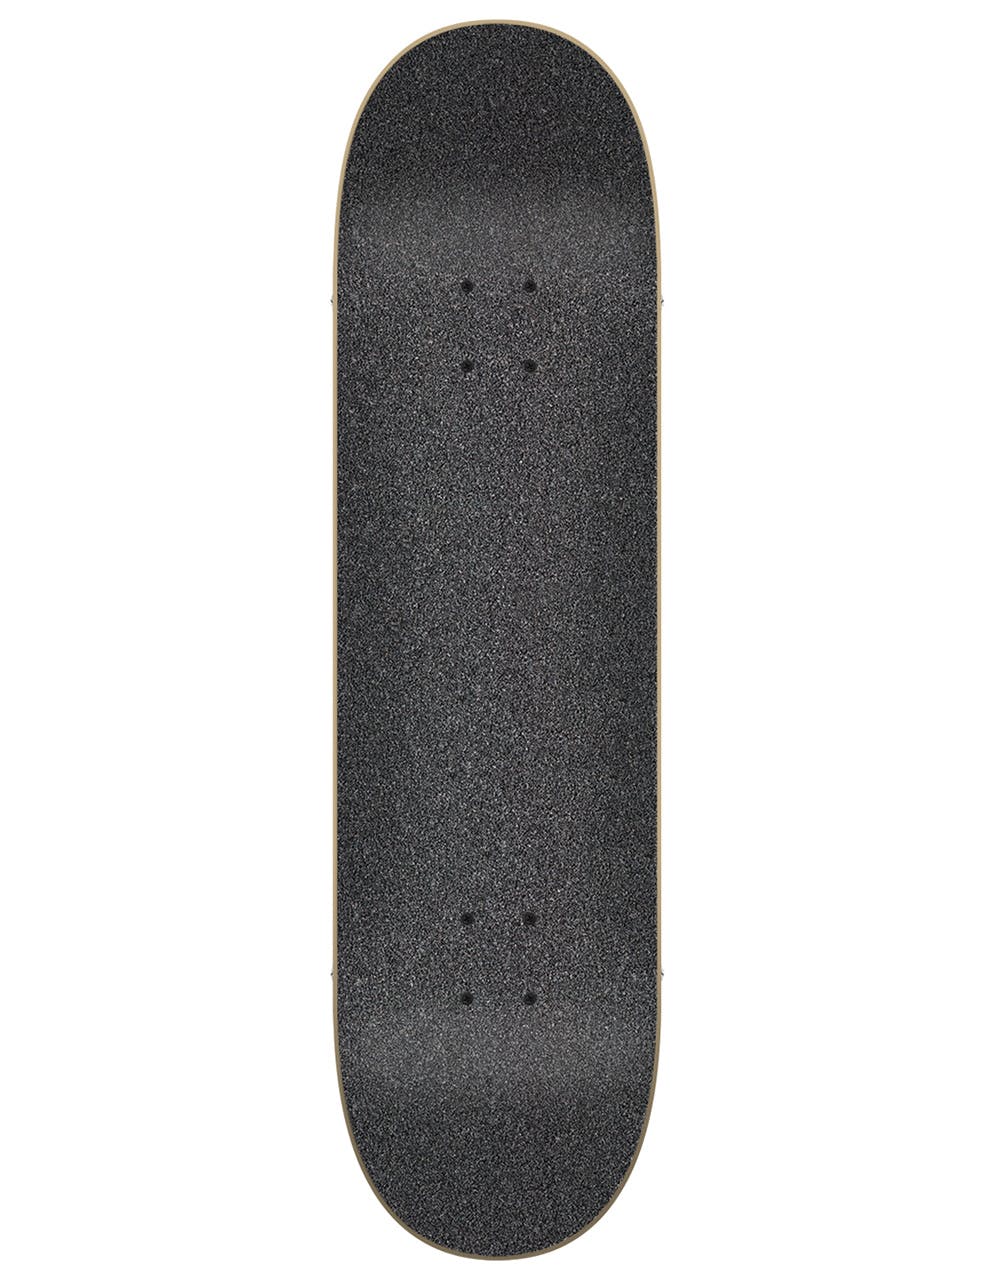 Flip Odyssey Start Complete Skateboard - 7.75"